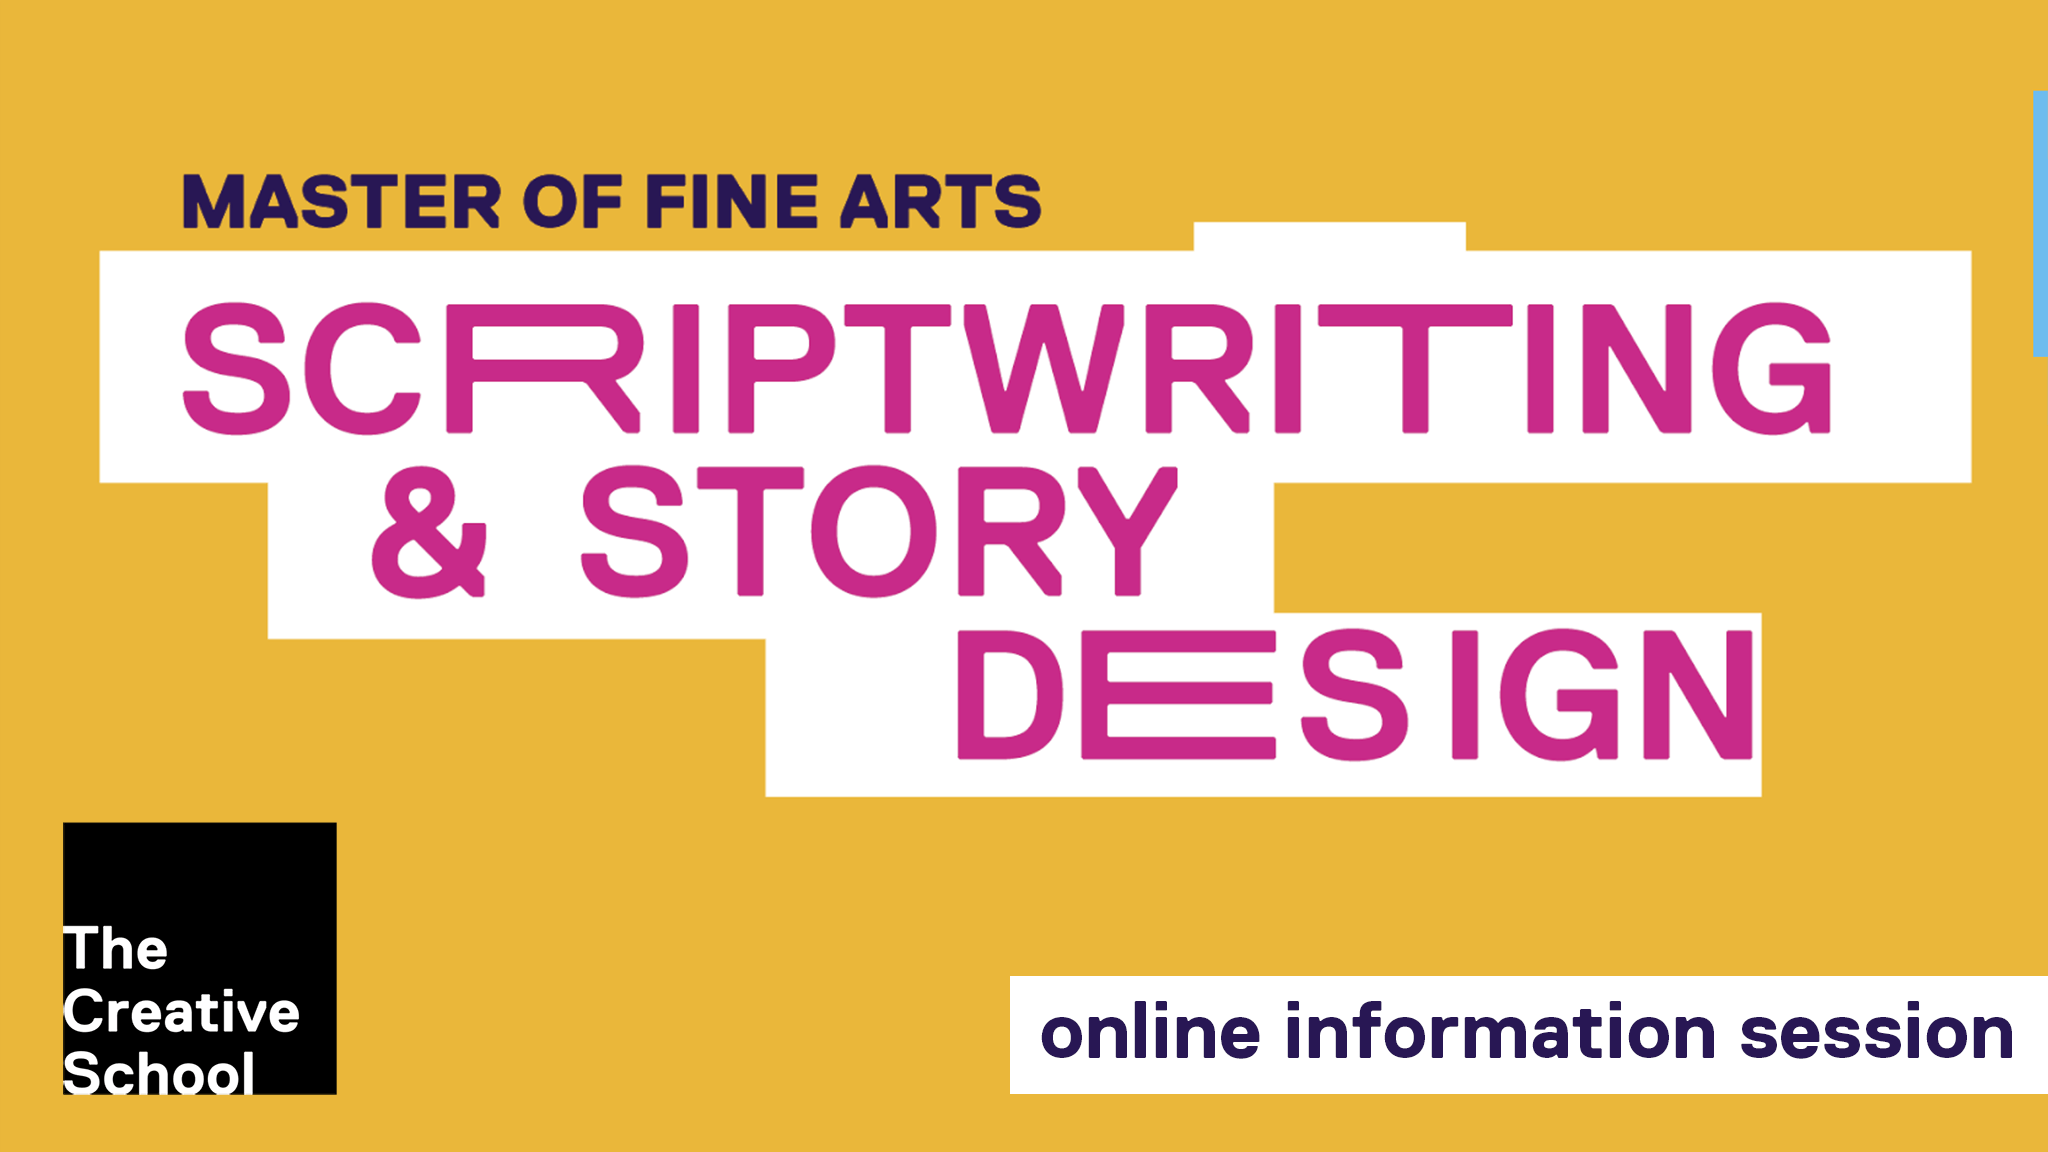 Scriptwritin & Story Design MFA Information session